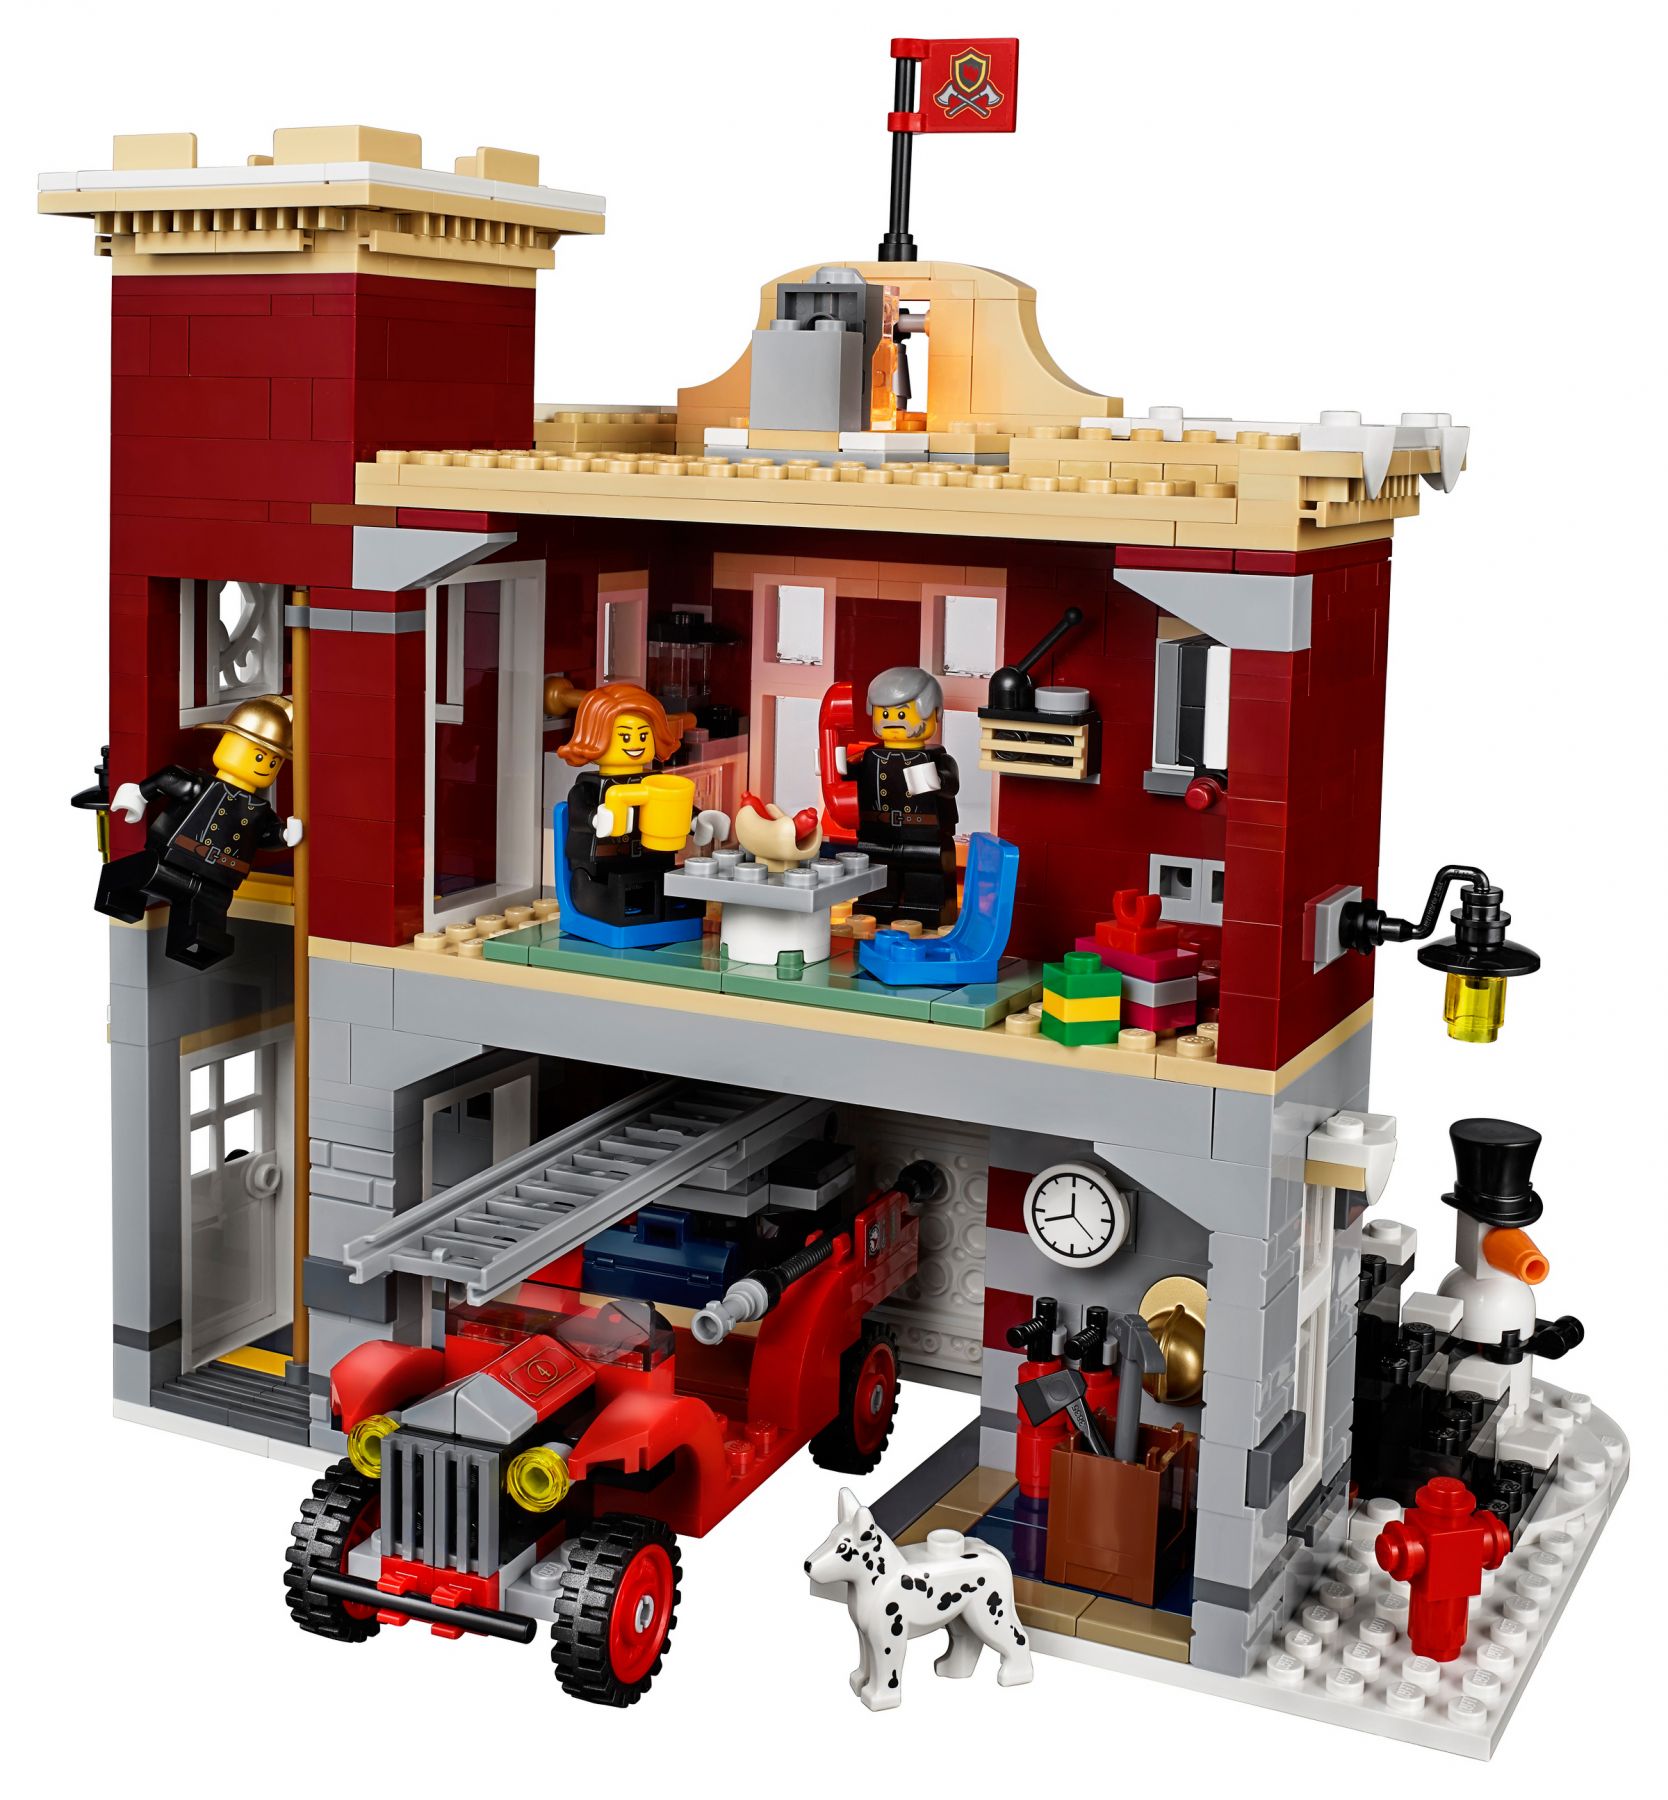 LEGO Advanced Models 10263 Winterliche Feuerwehrstation LEGO_10263_alt3.jpg